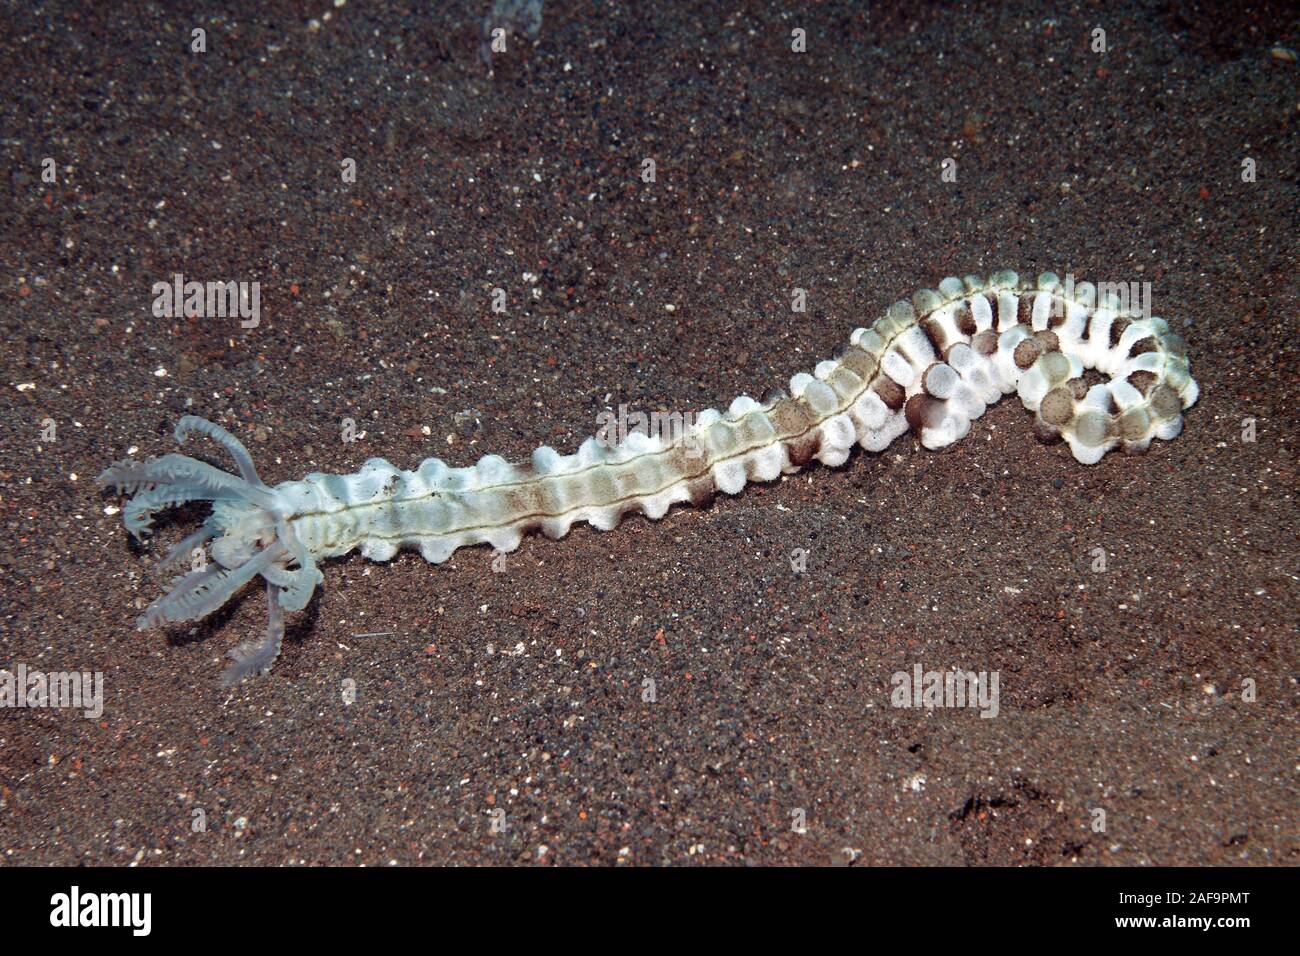 Schlangenmeer-Gurke, Synapta maculata. Auch bekannt als Spotted Worm Sea Cucumber, Feather Mouth Sea Cucumber und Giant Synaptid Sea Cucumber. Stockfoto